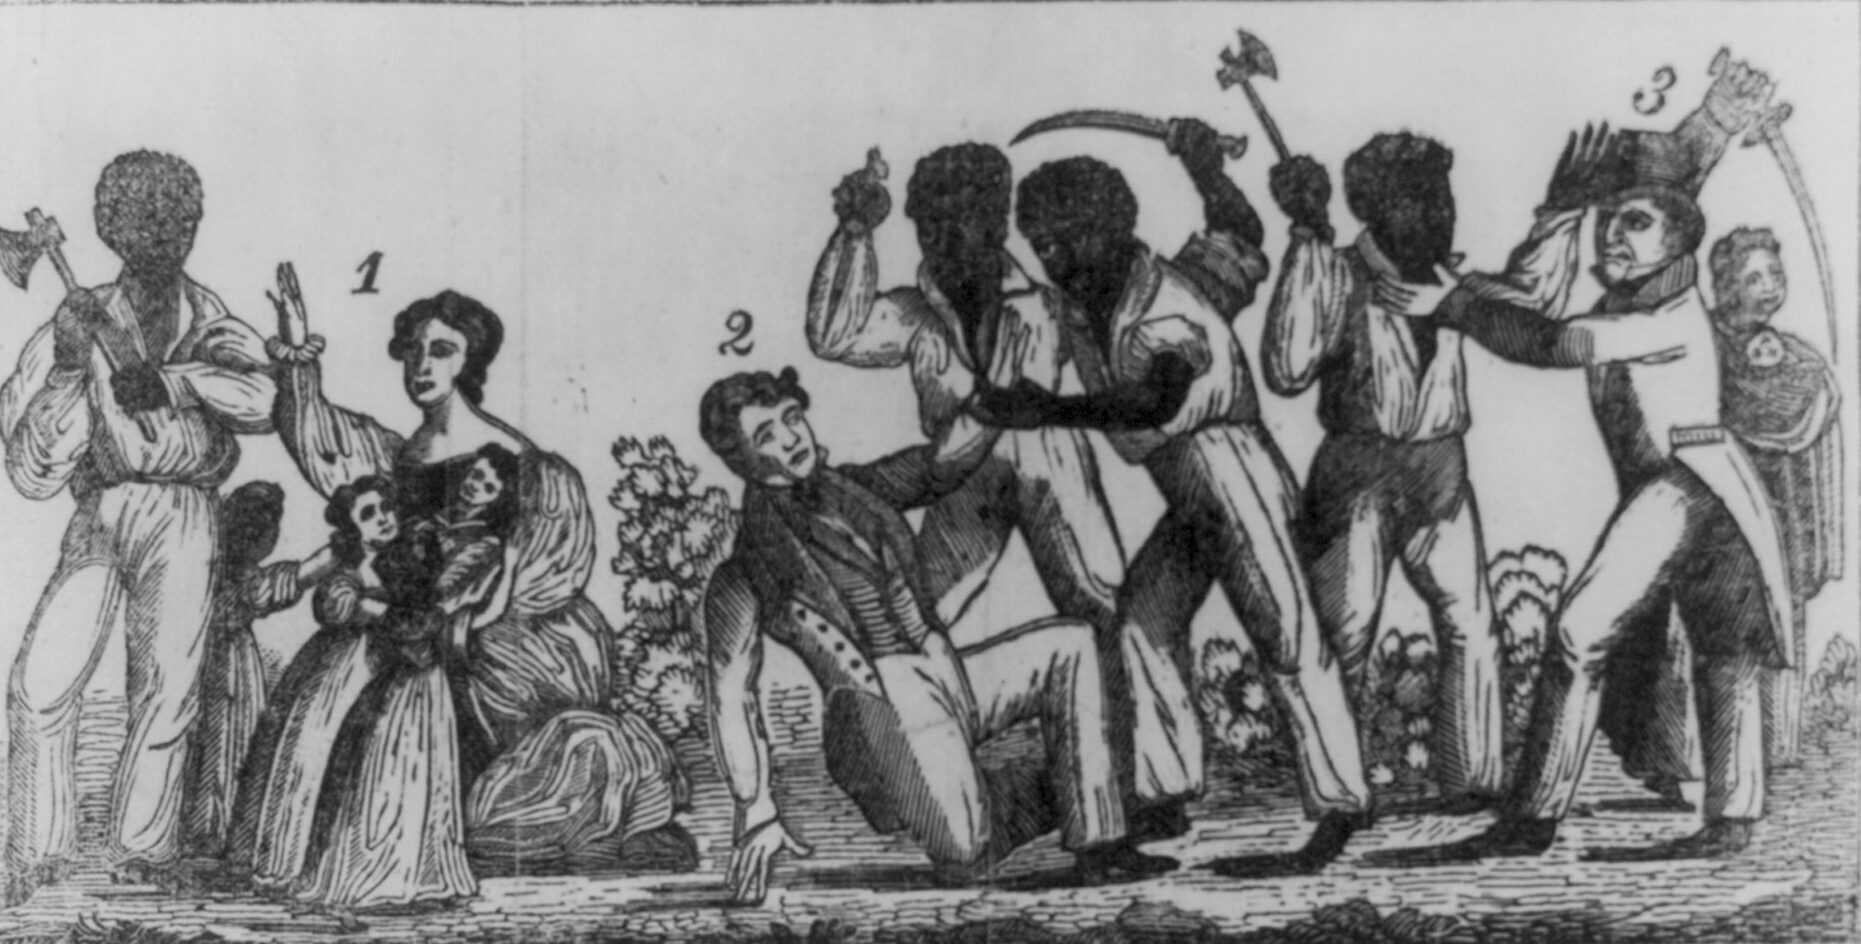 Illustration of Nat Turner's Rebellion